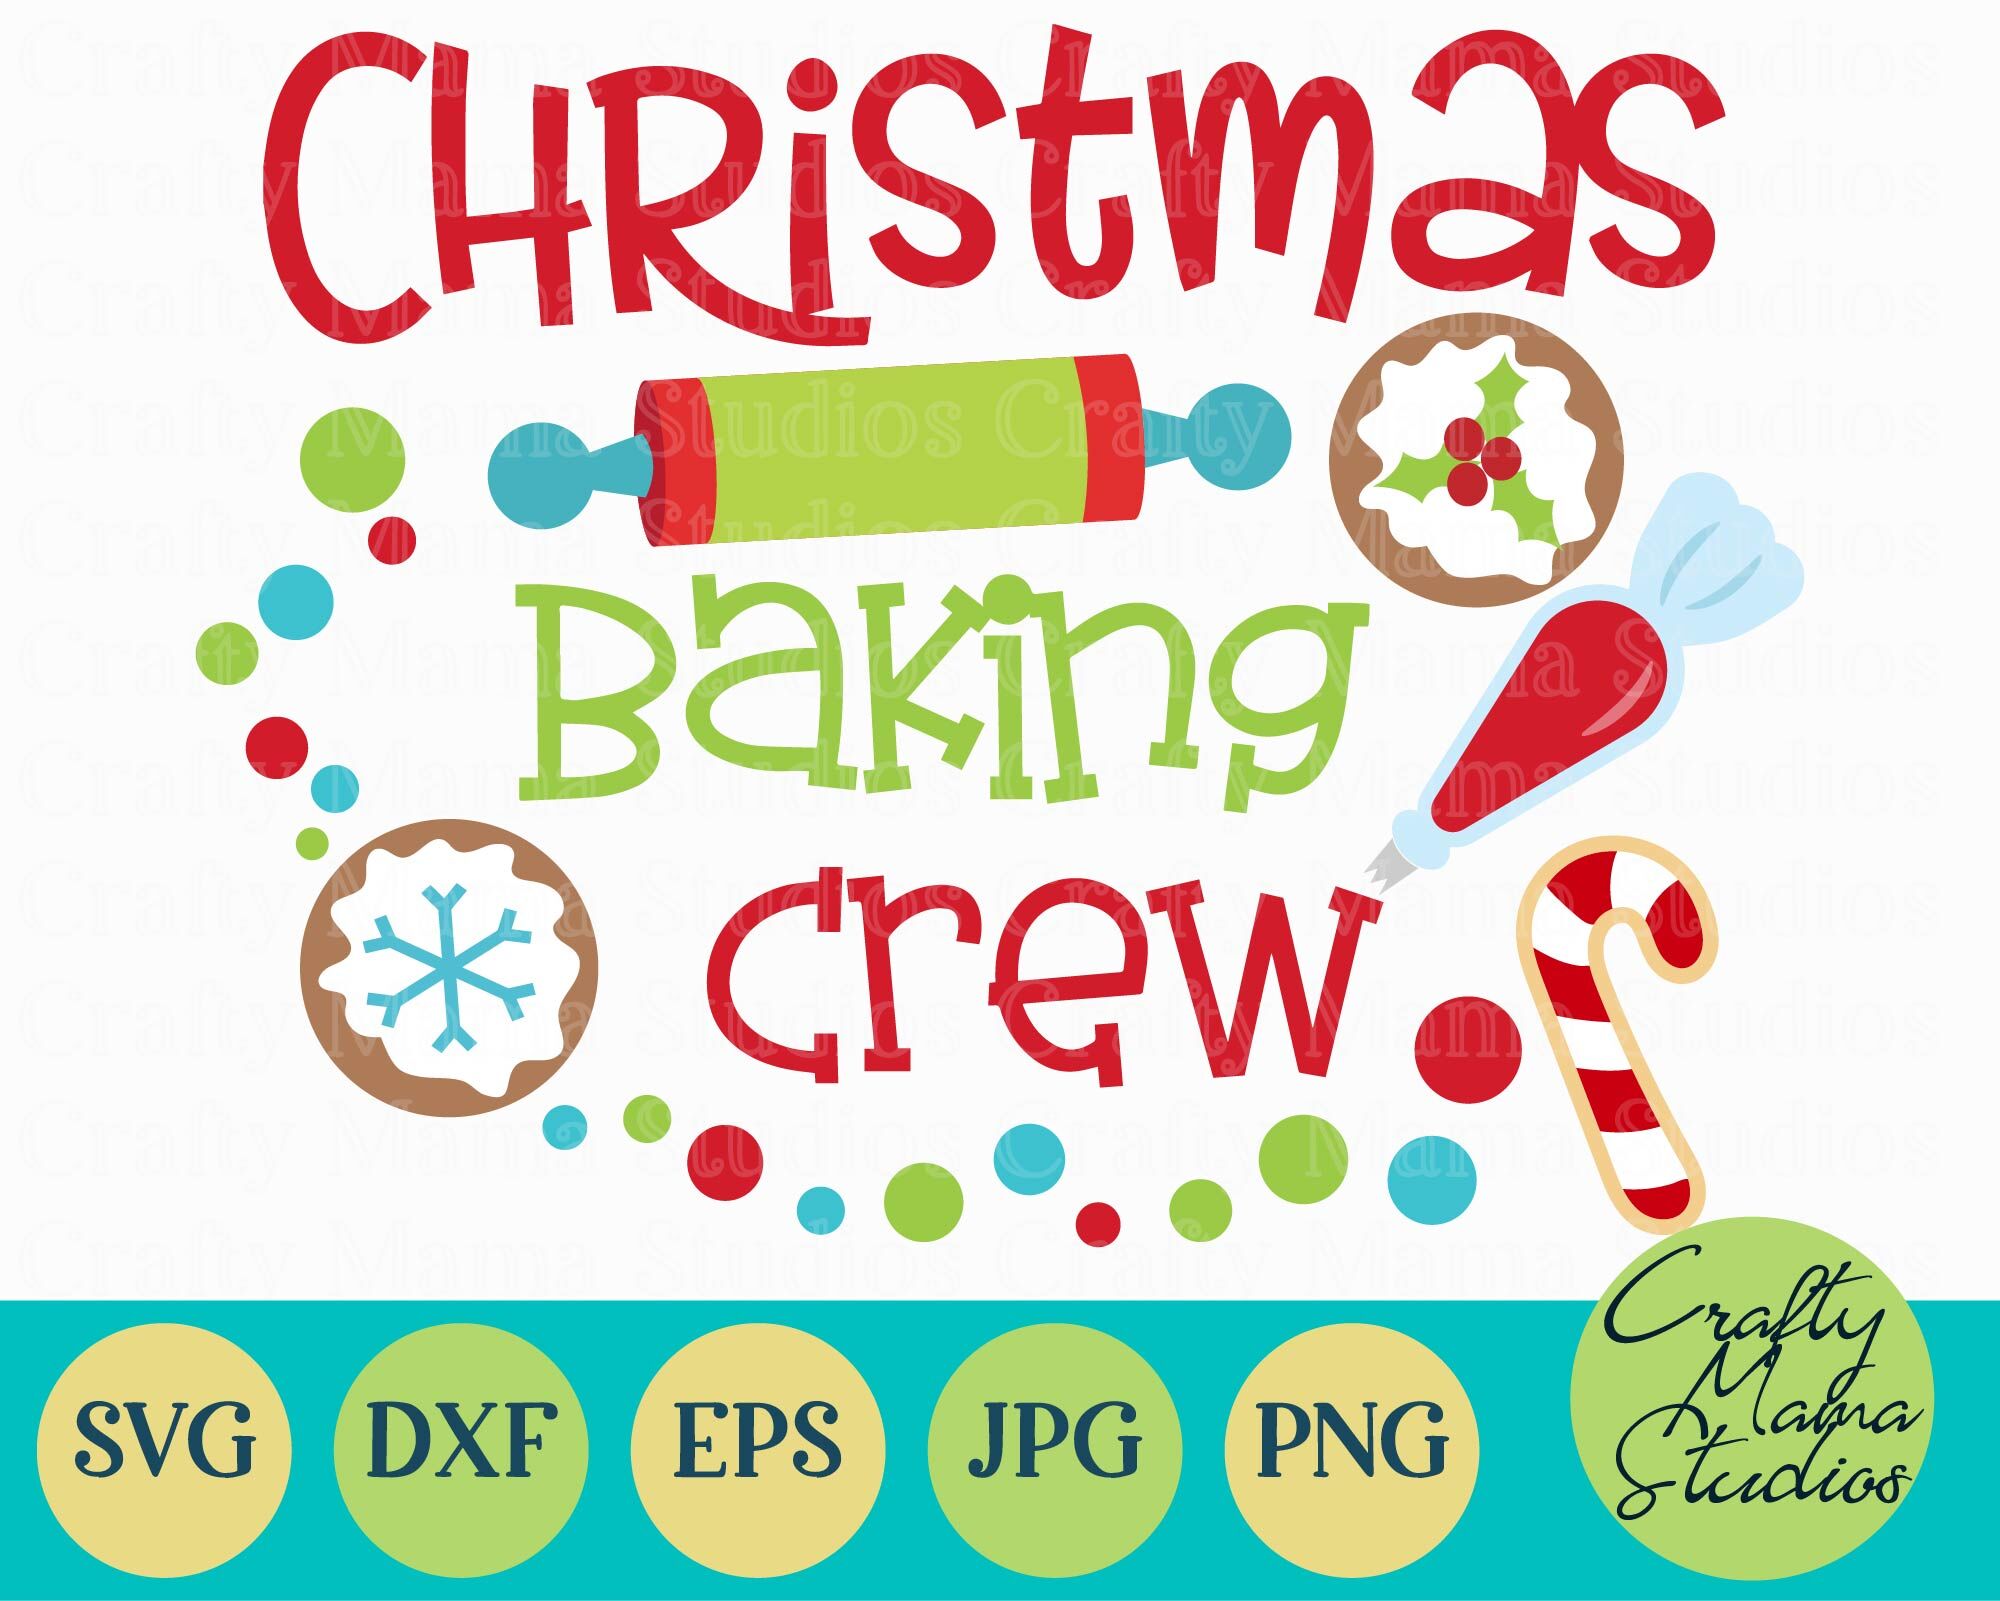 Christmas Svg Christmas Baking Crew Christmas Cookies Baking By Crafty Mama Studios Thehungryjpeg Com